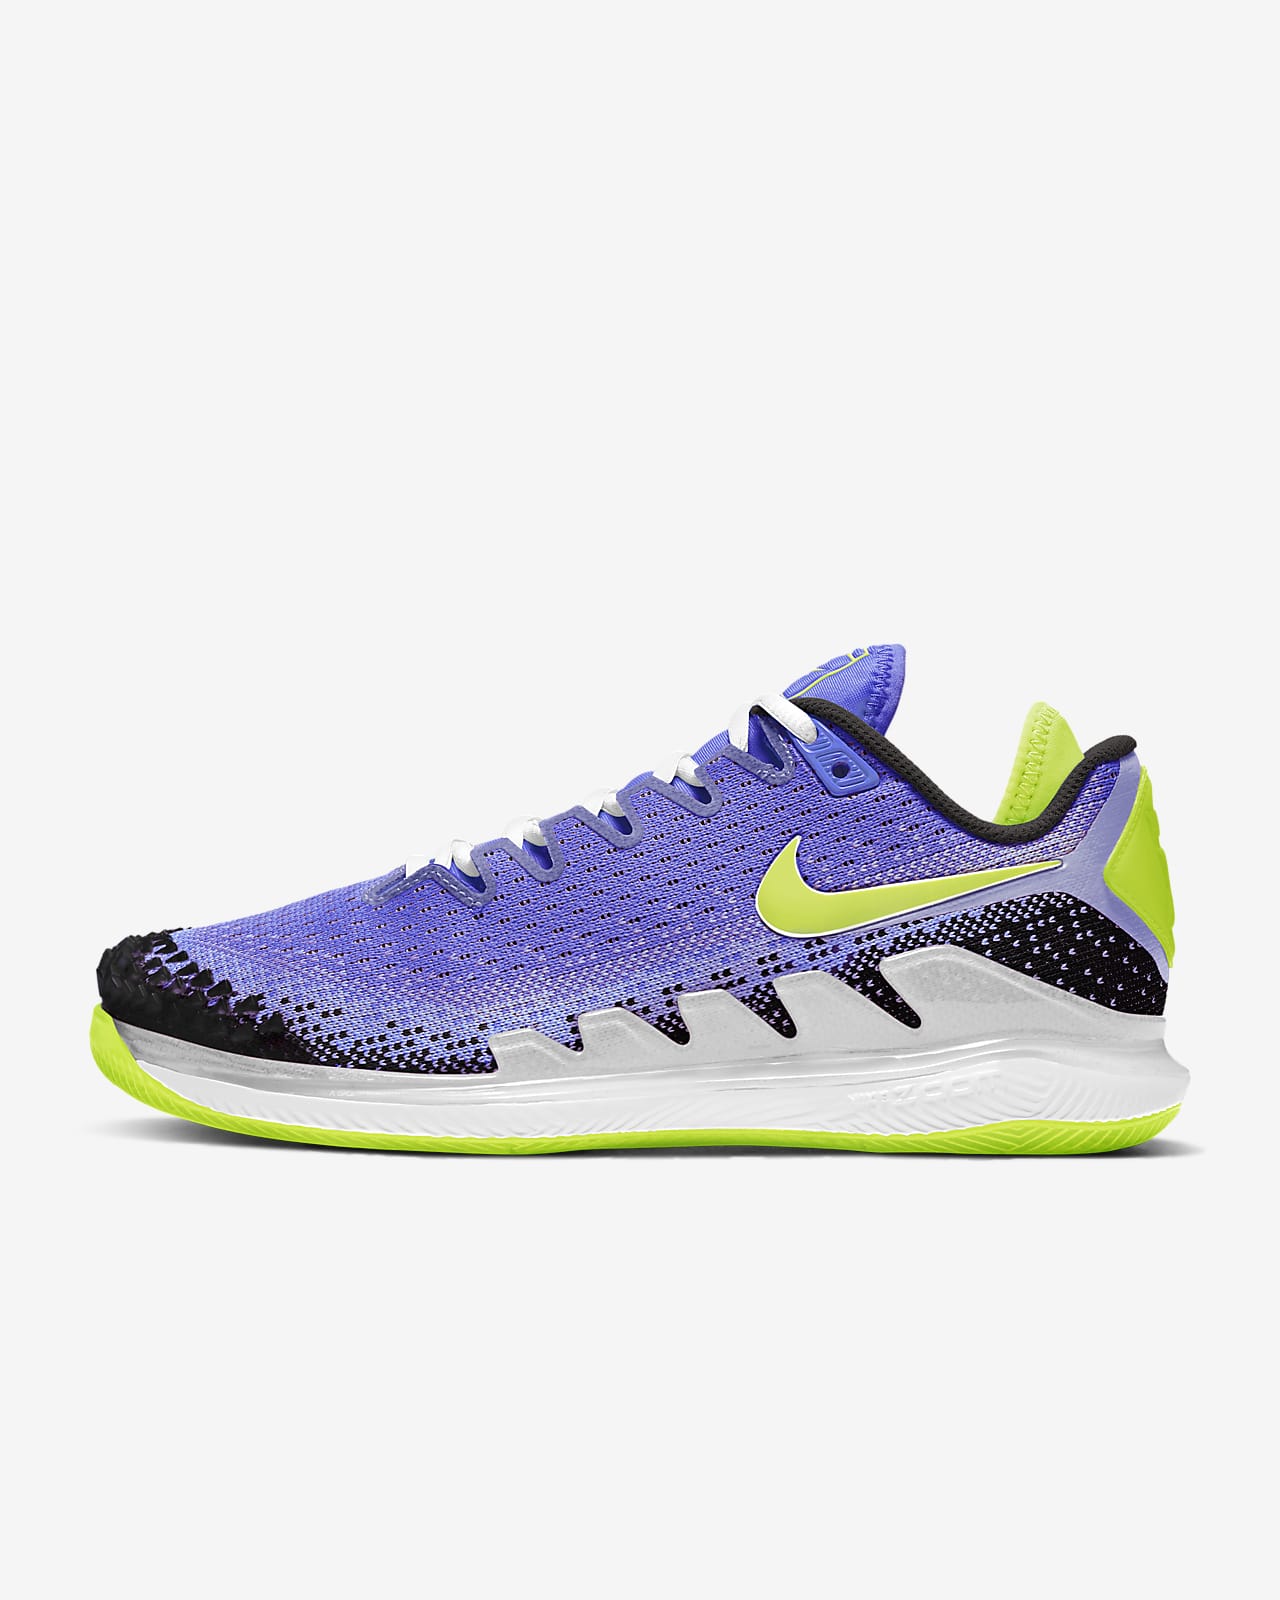 NikeCourt Air Zoom Vapor X Knit Women's Hard Court Tennis Shoes شمندر معلب